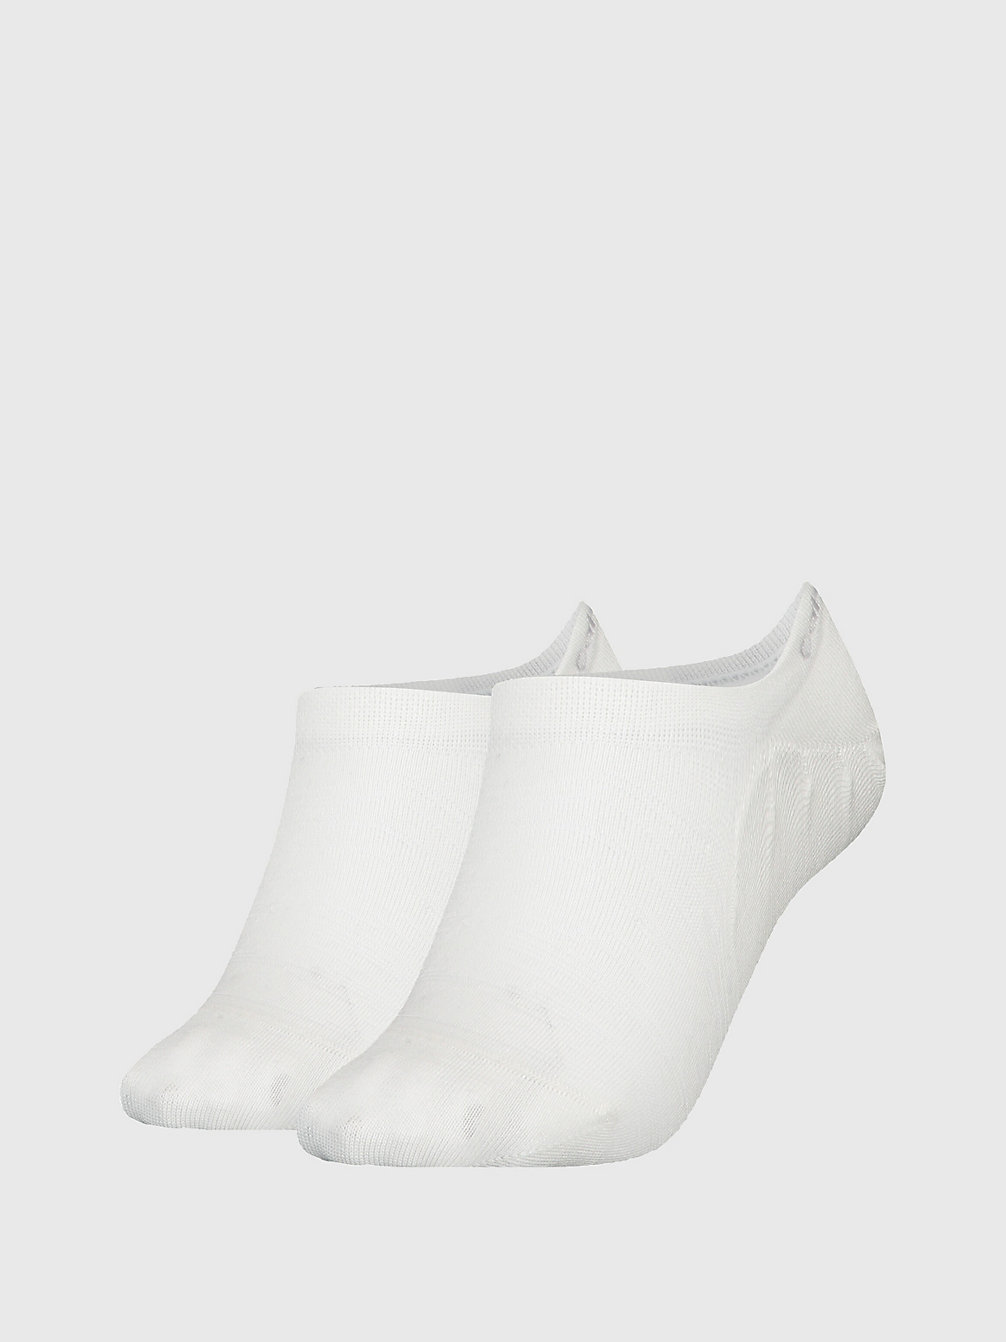 WHITE 2 Pack Invisible Socks undefined women Calvin Klein